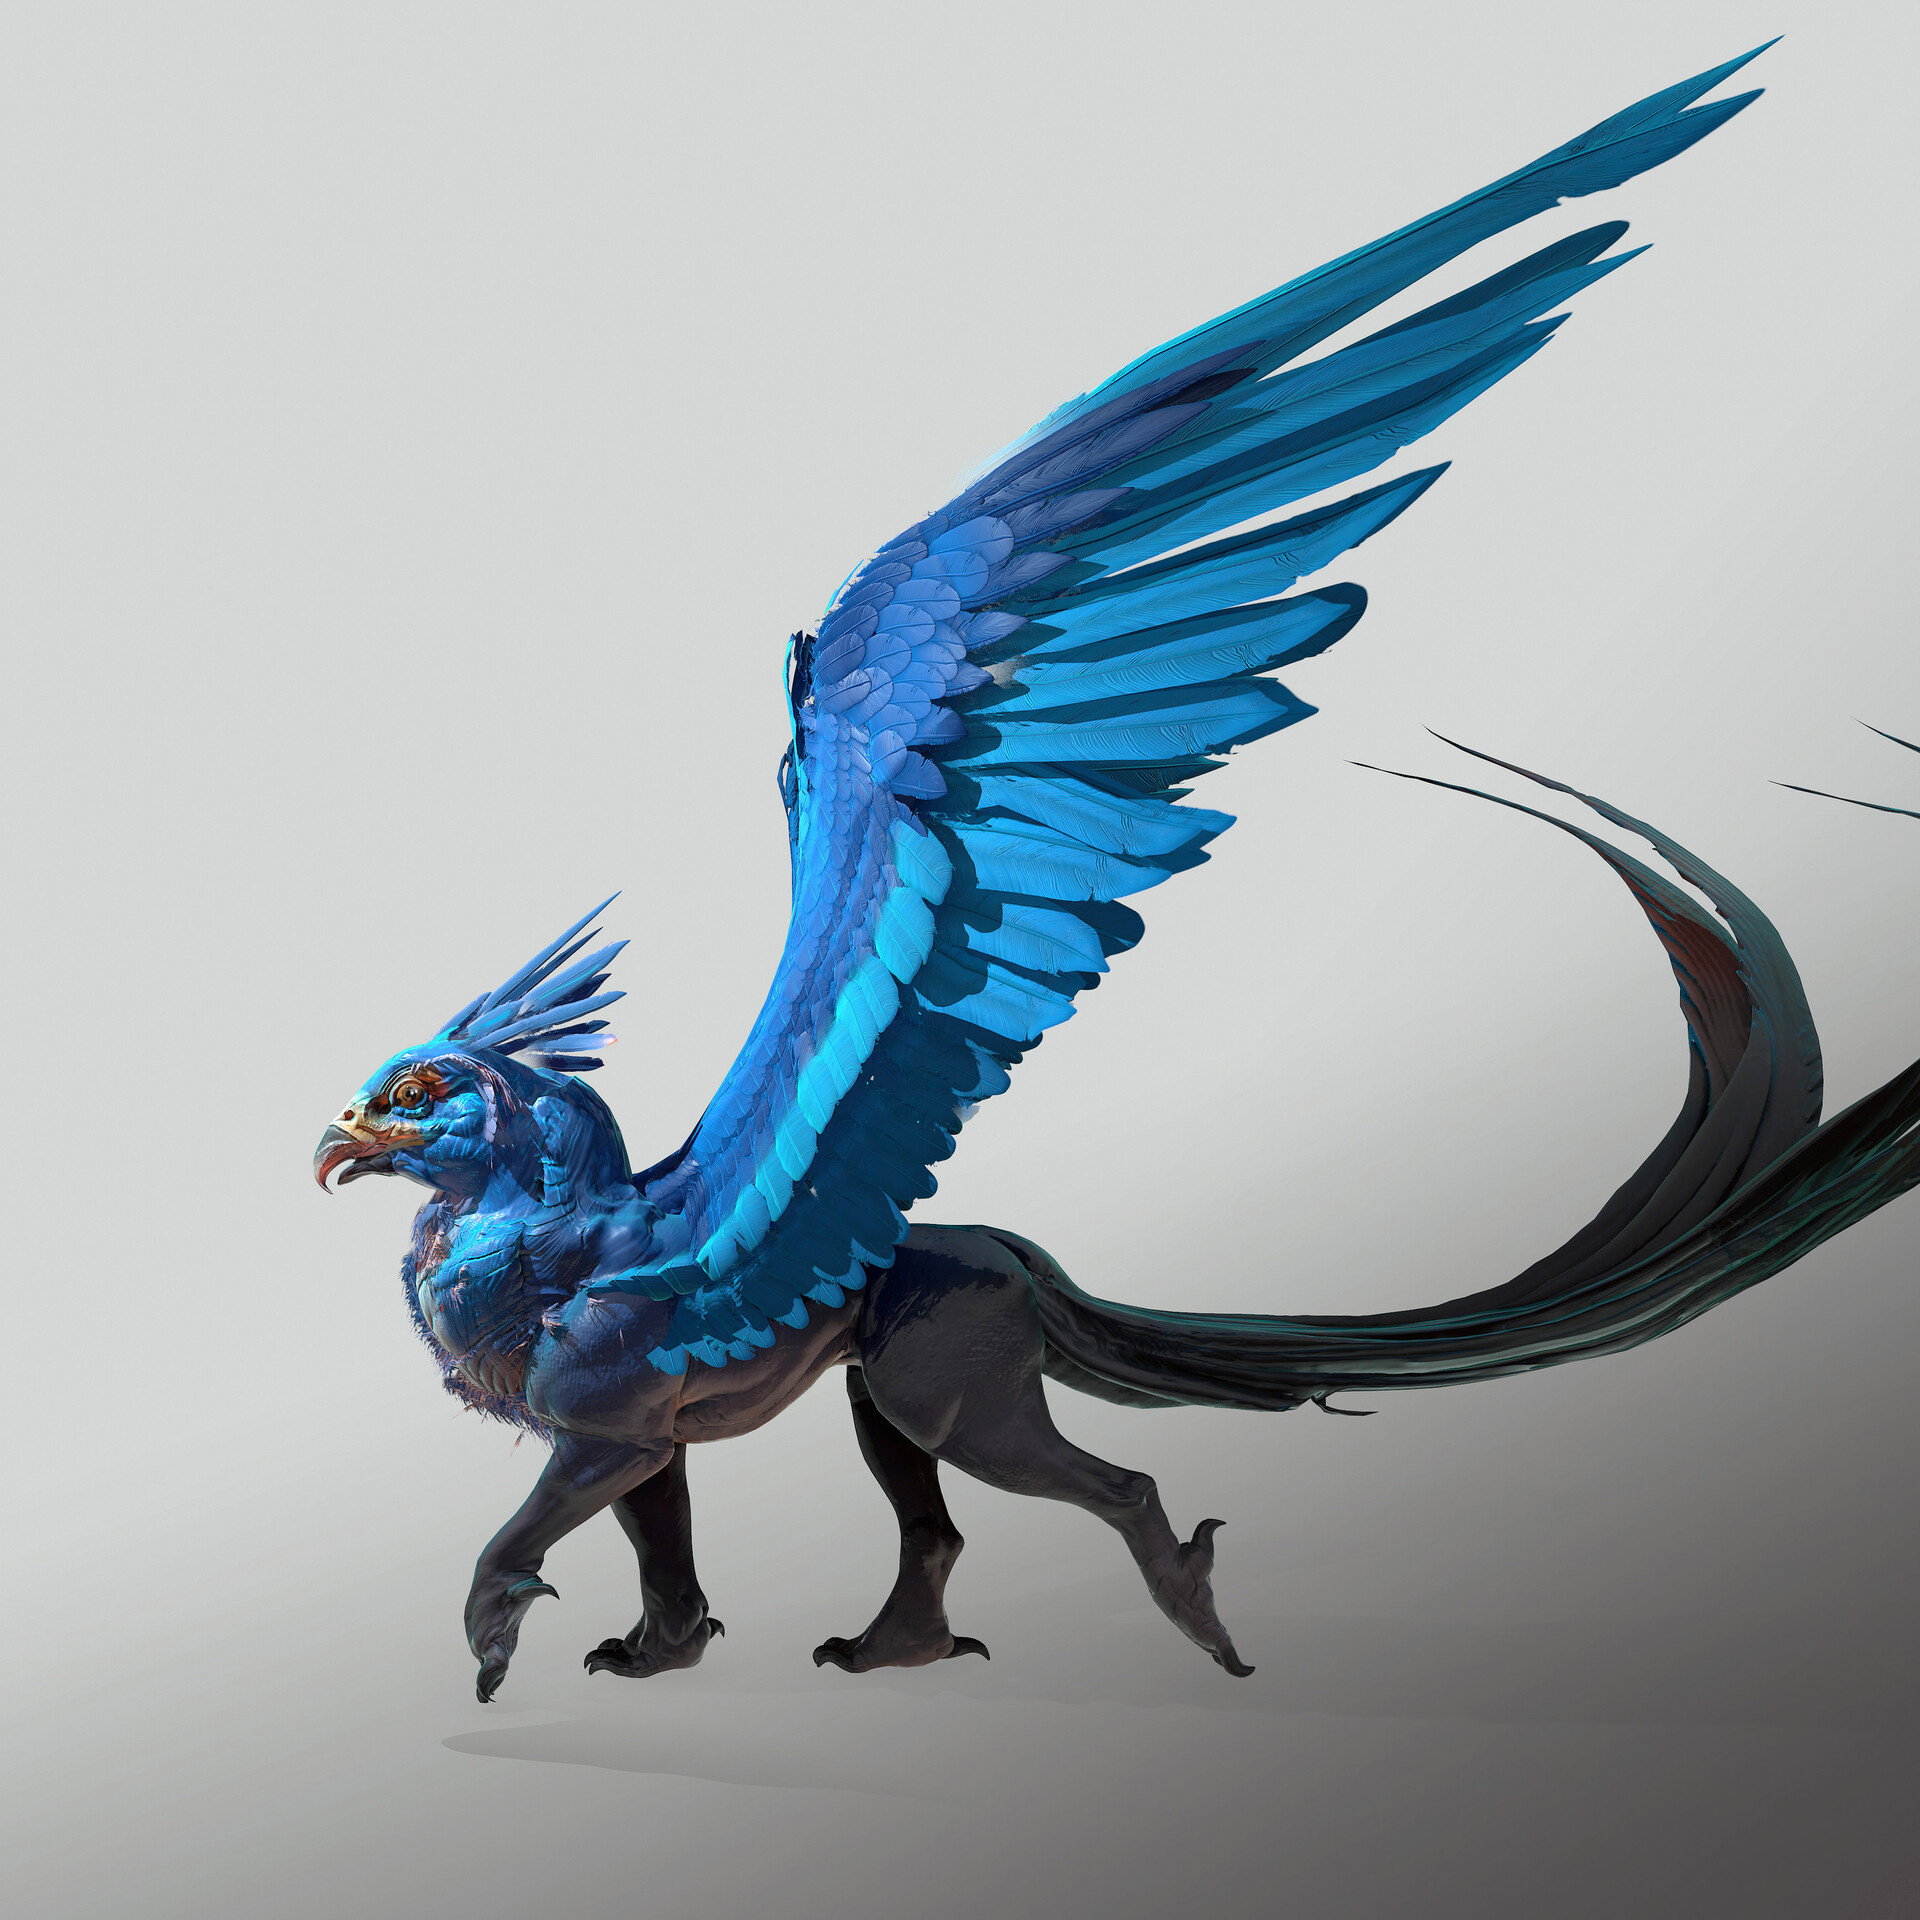 General 1920x1920 digital art hippogriff wings blue fantasy art artwork CGI